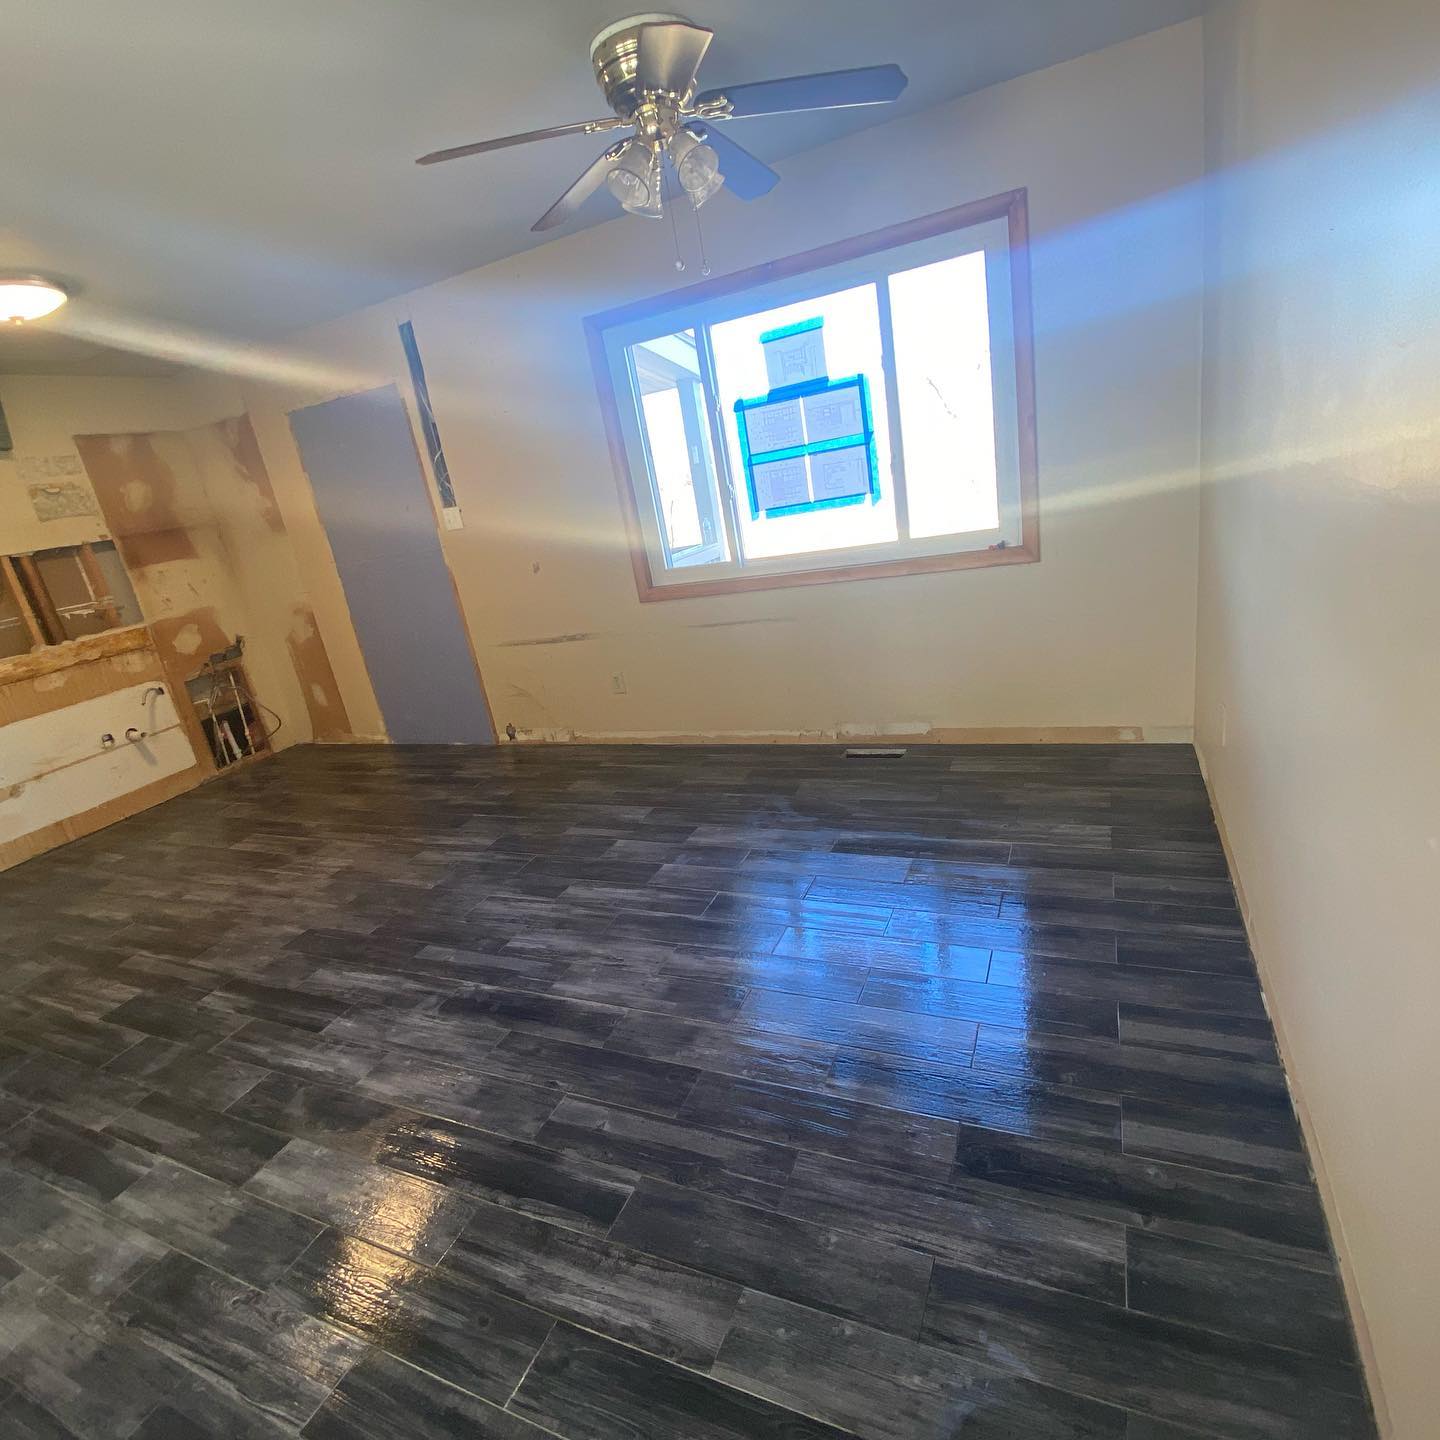 New kitchen floor install